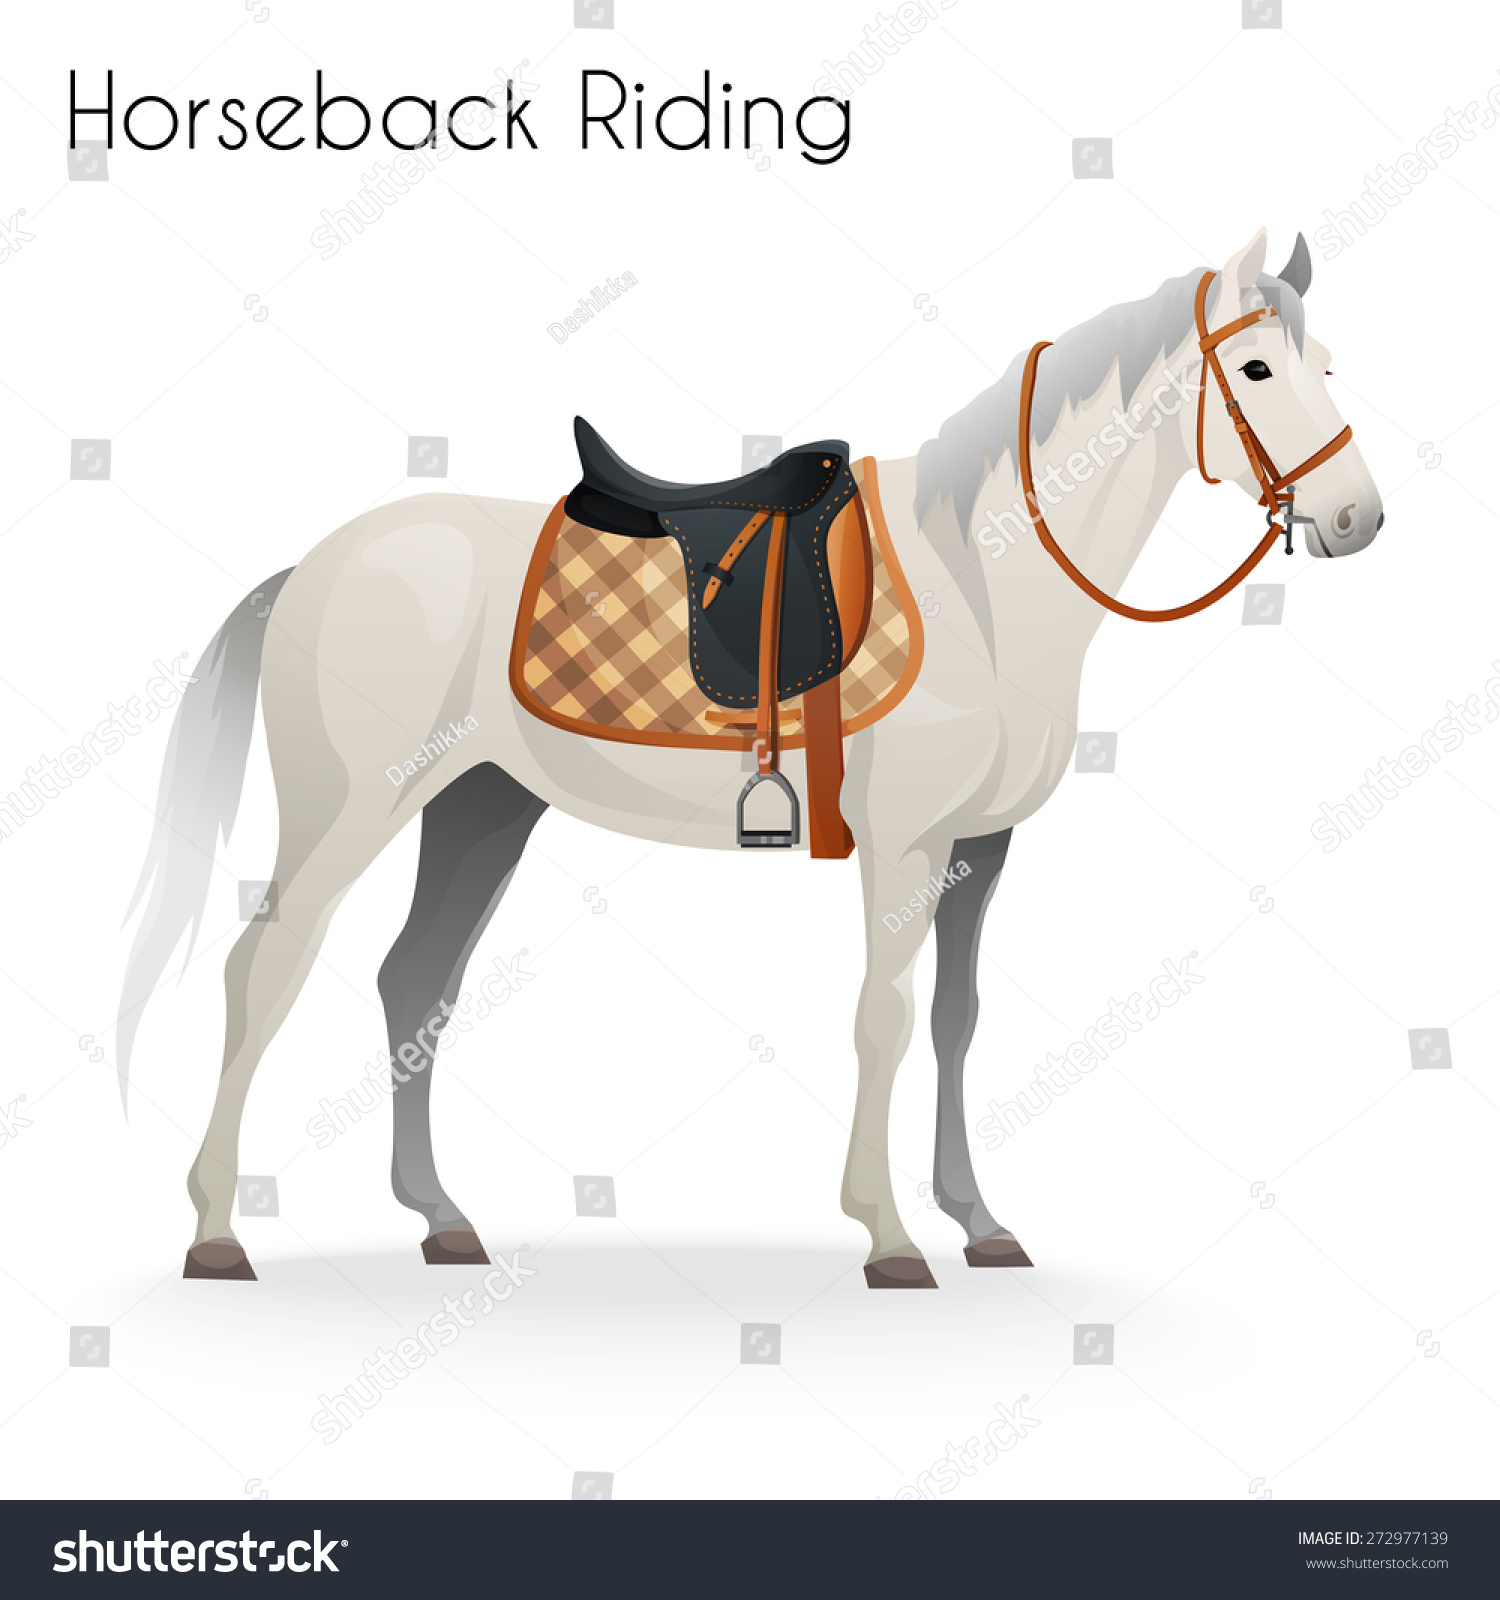 horseback riding equipment